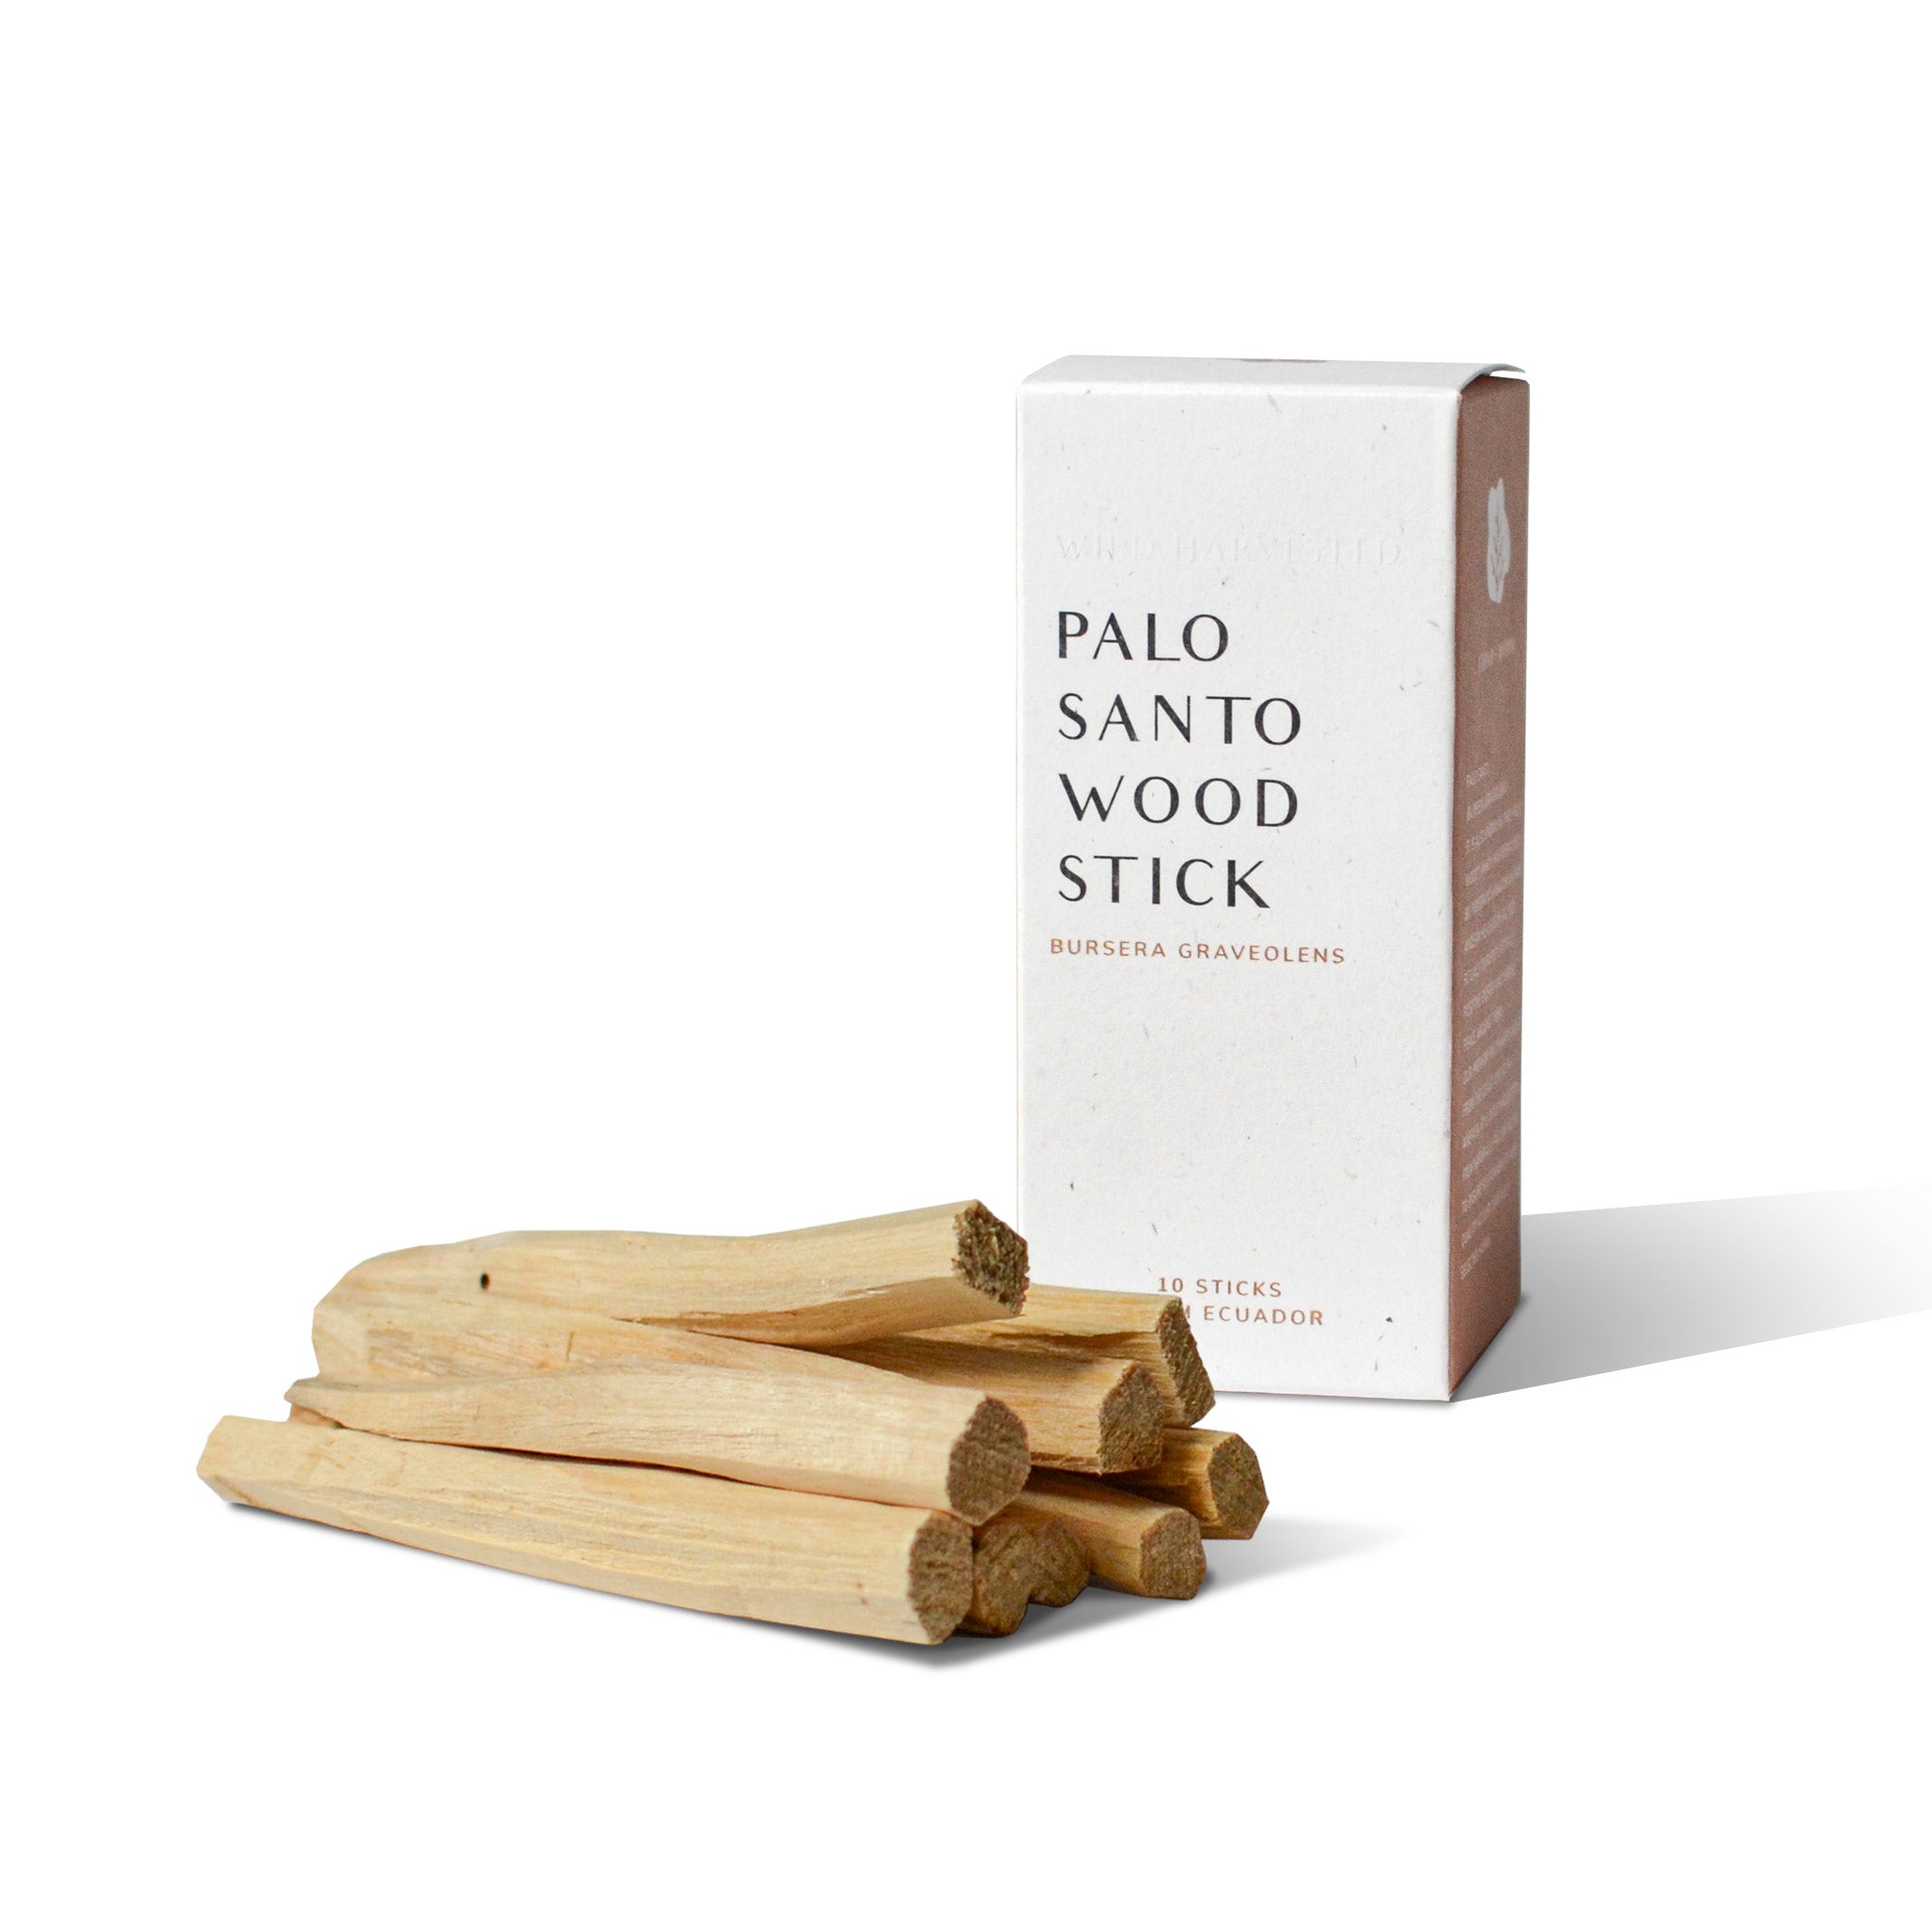 Ecuador palo santo wood smudge sticks and the package.